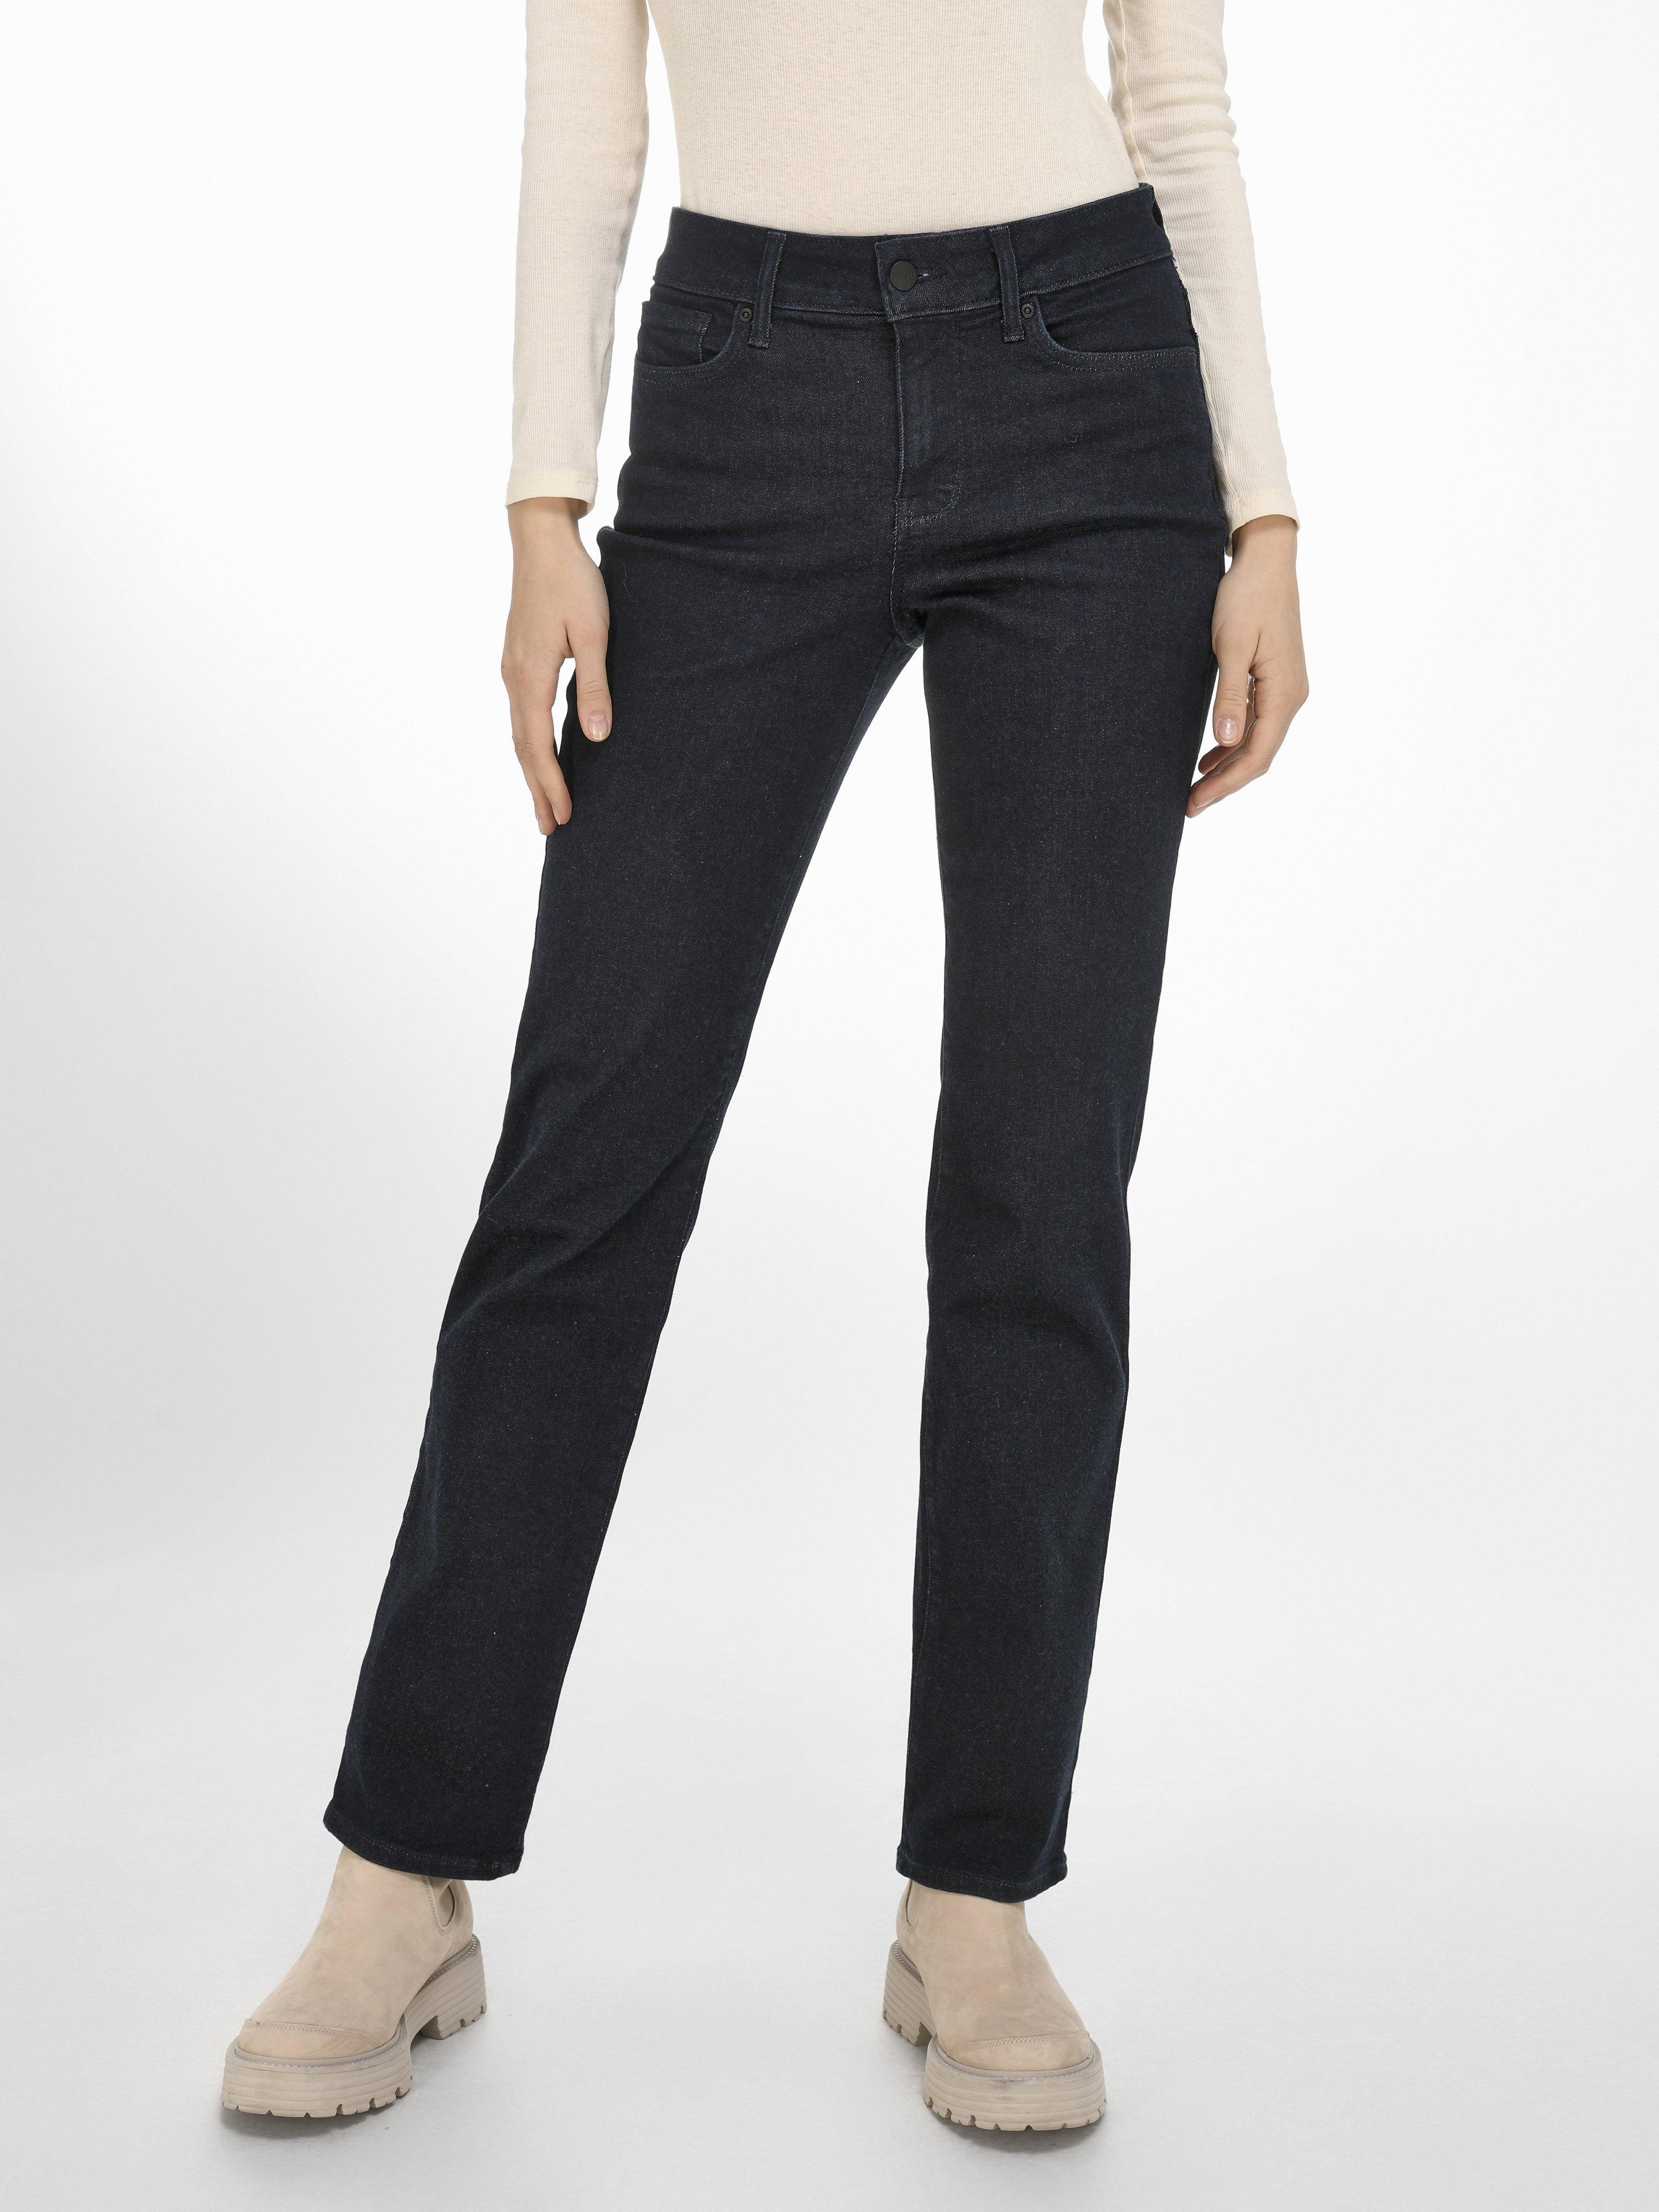 NYDJ - Jeans model Marilyn Straight